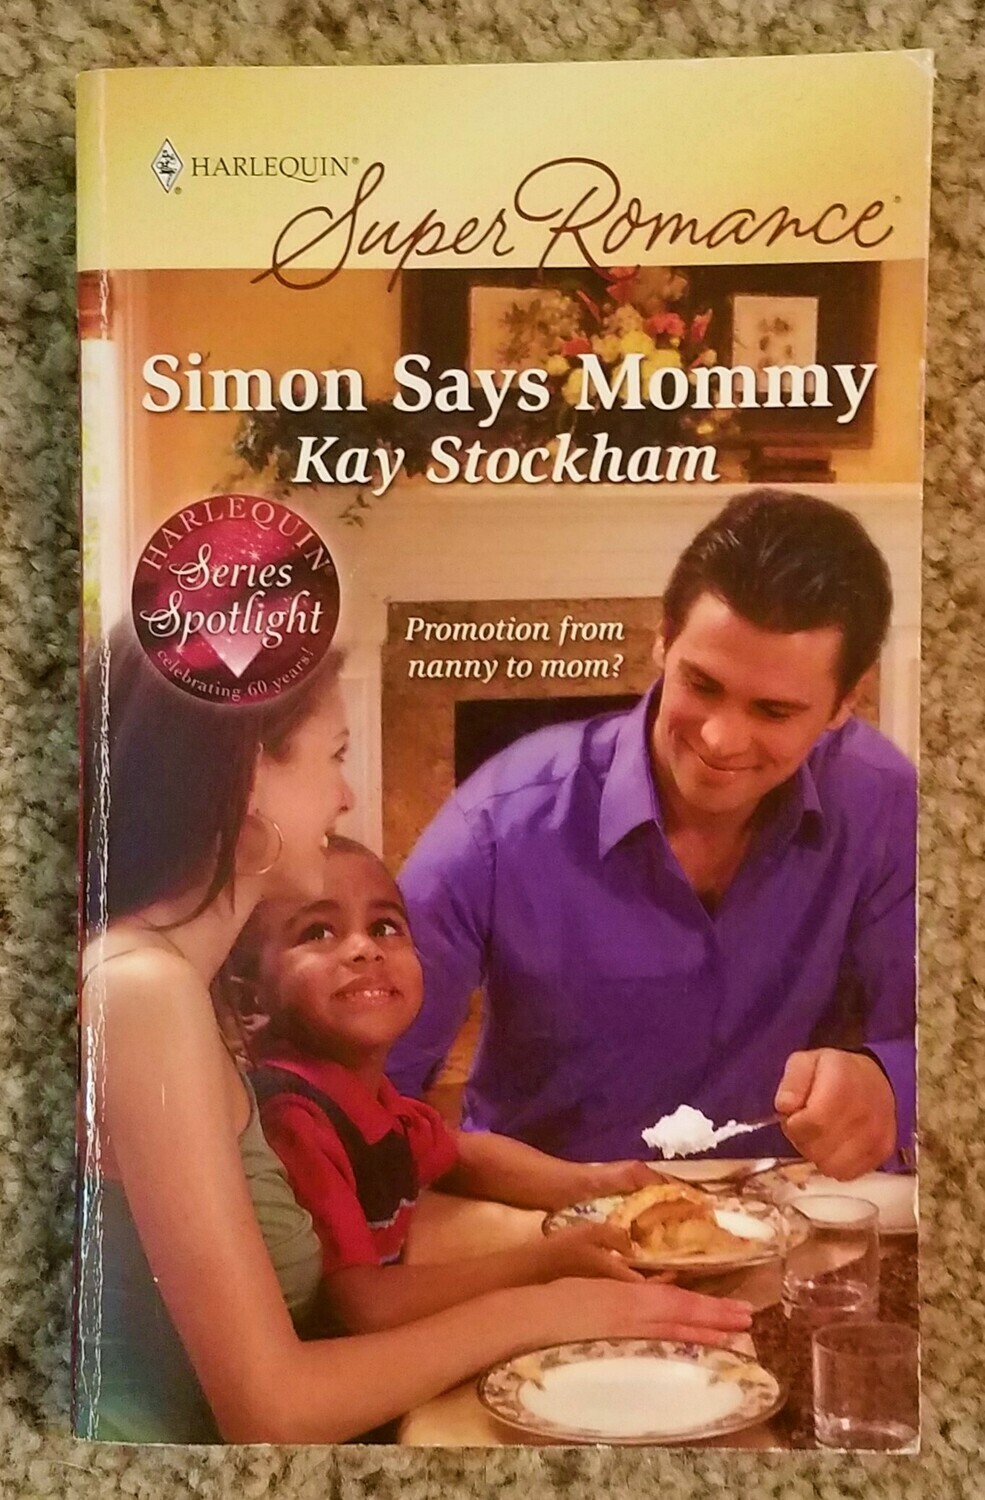 Simon Says Mommy by Kay Stockham